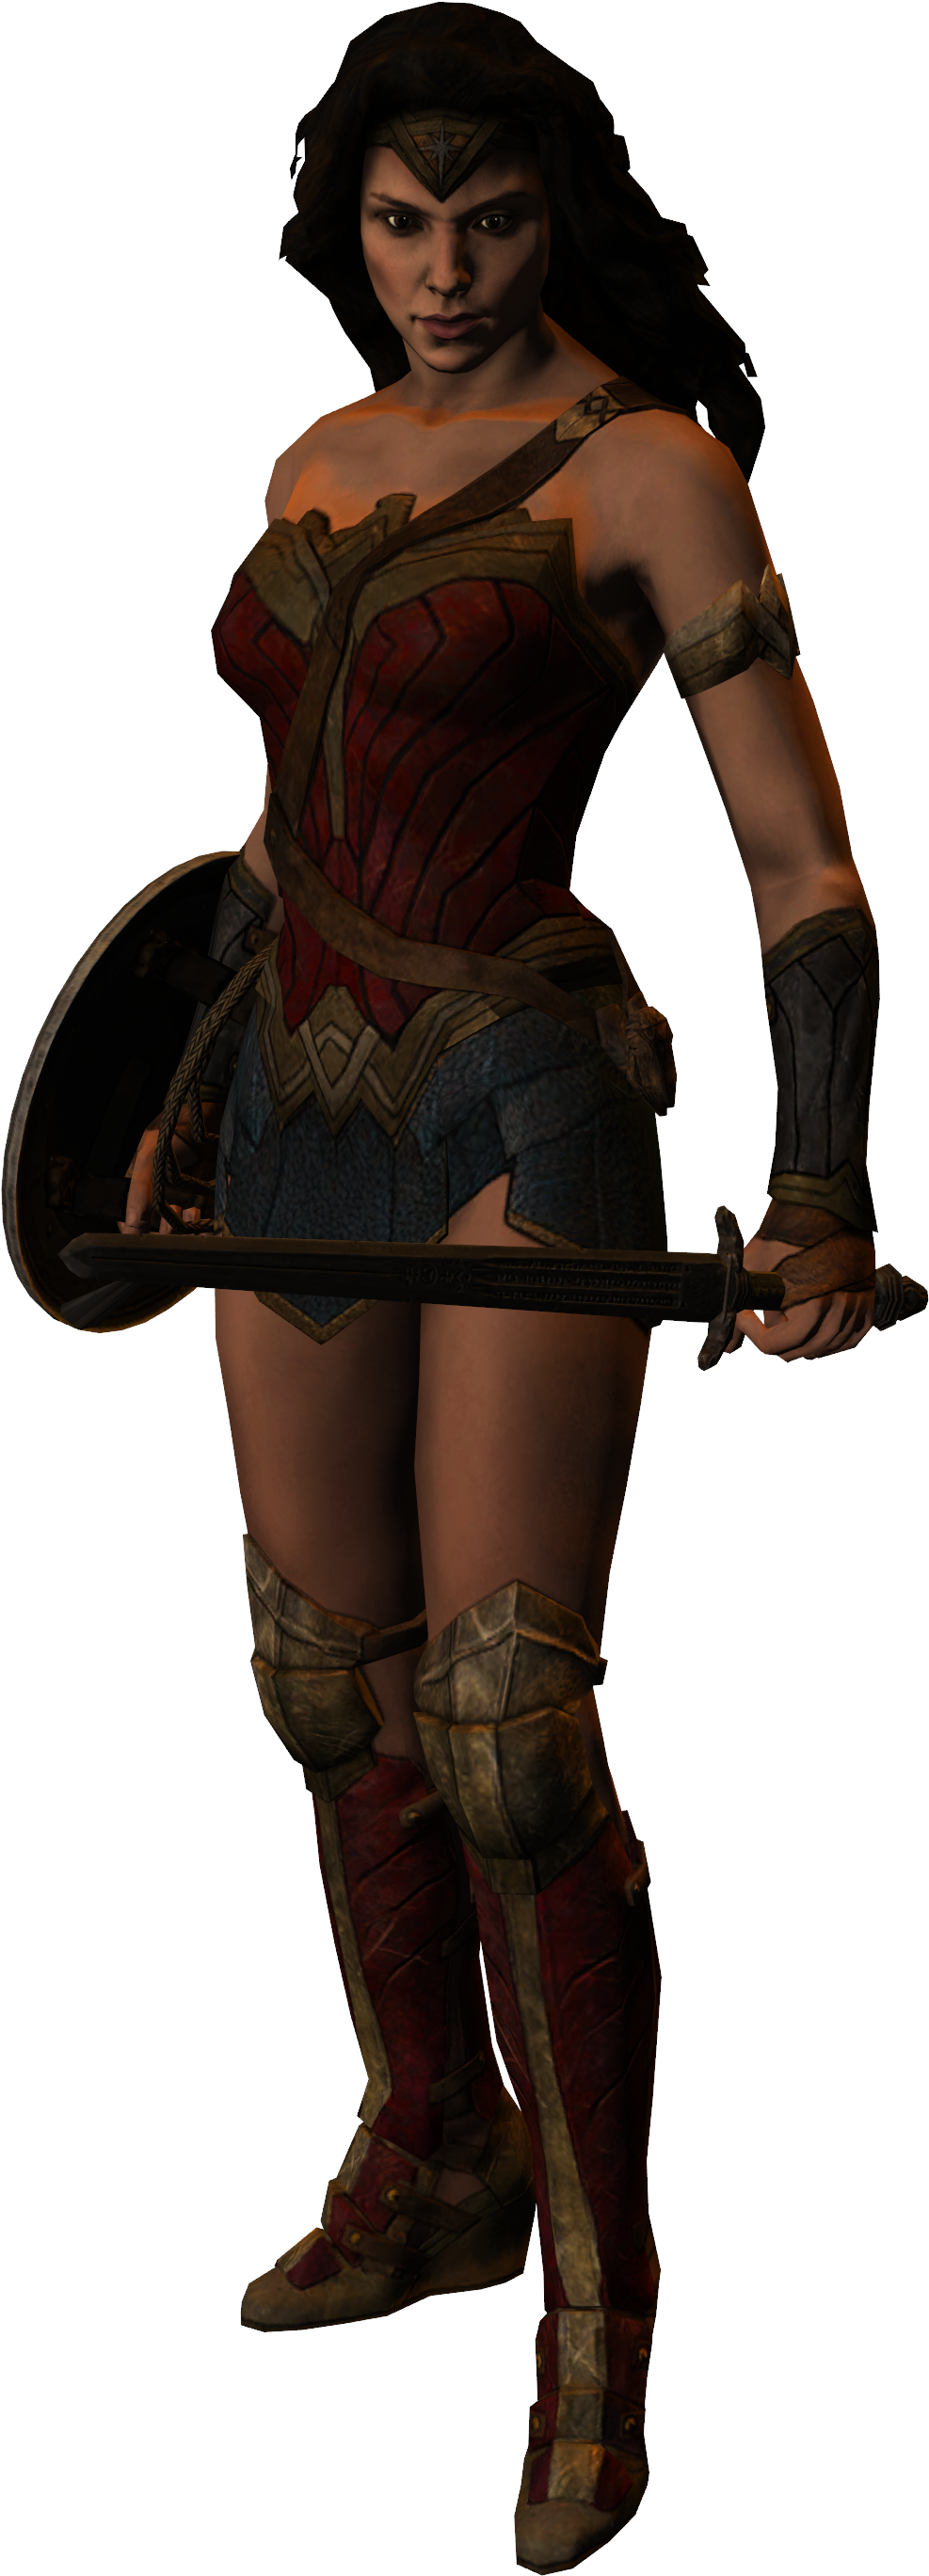 Gal Gadot Wonder Woman By Caplagrobin - Gal Gadot Wonder Woman Injustice (2700x2788)